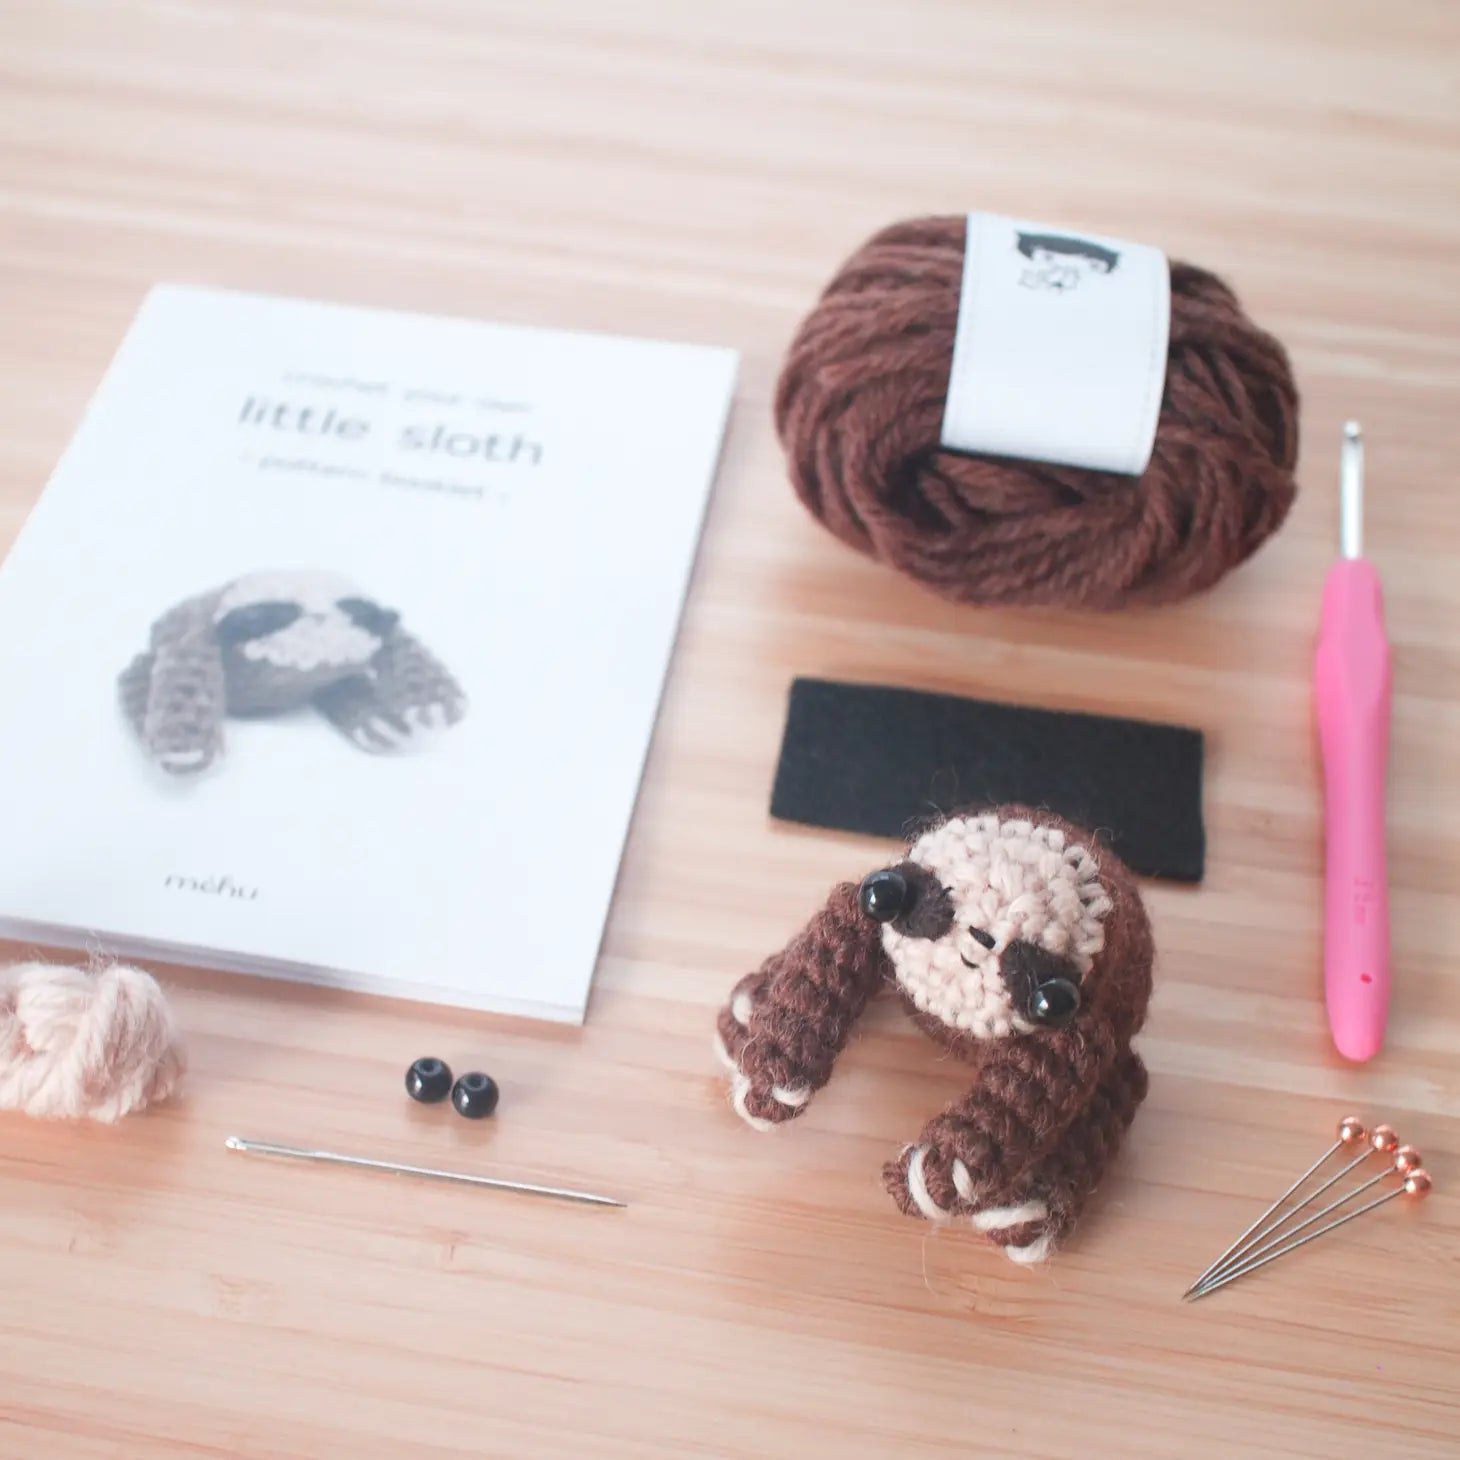 Amigurumi kit - crochet sloth craft kit